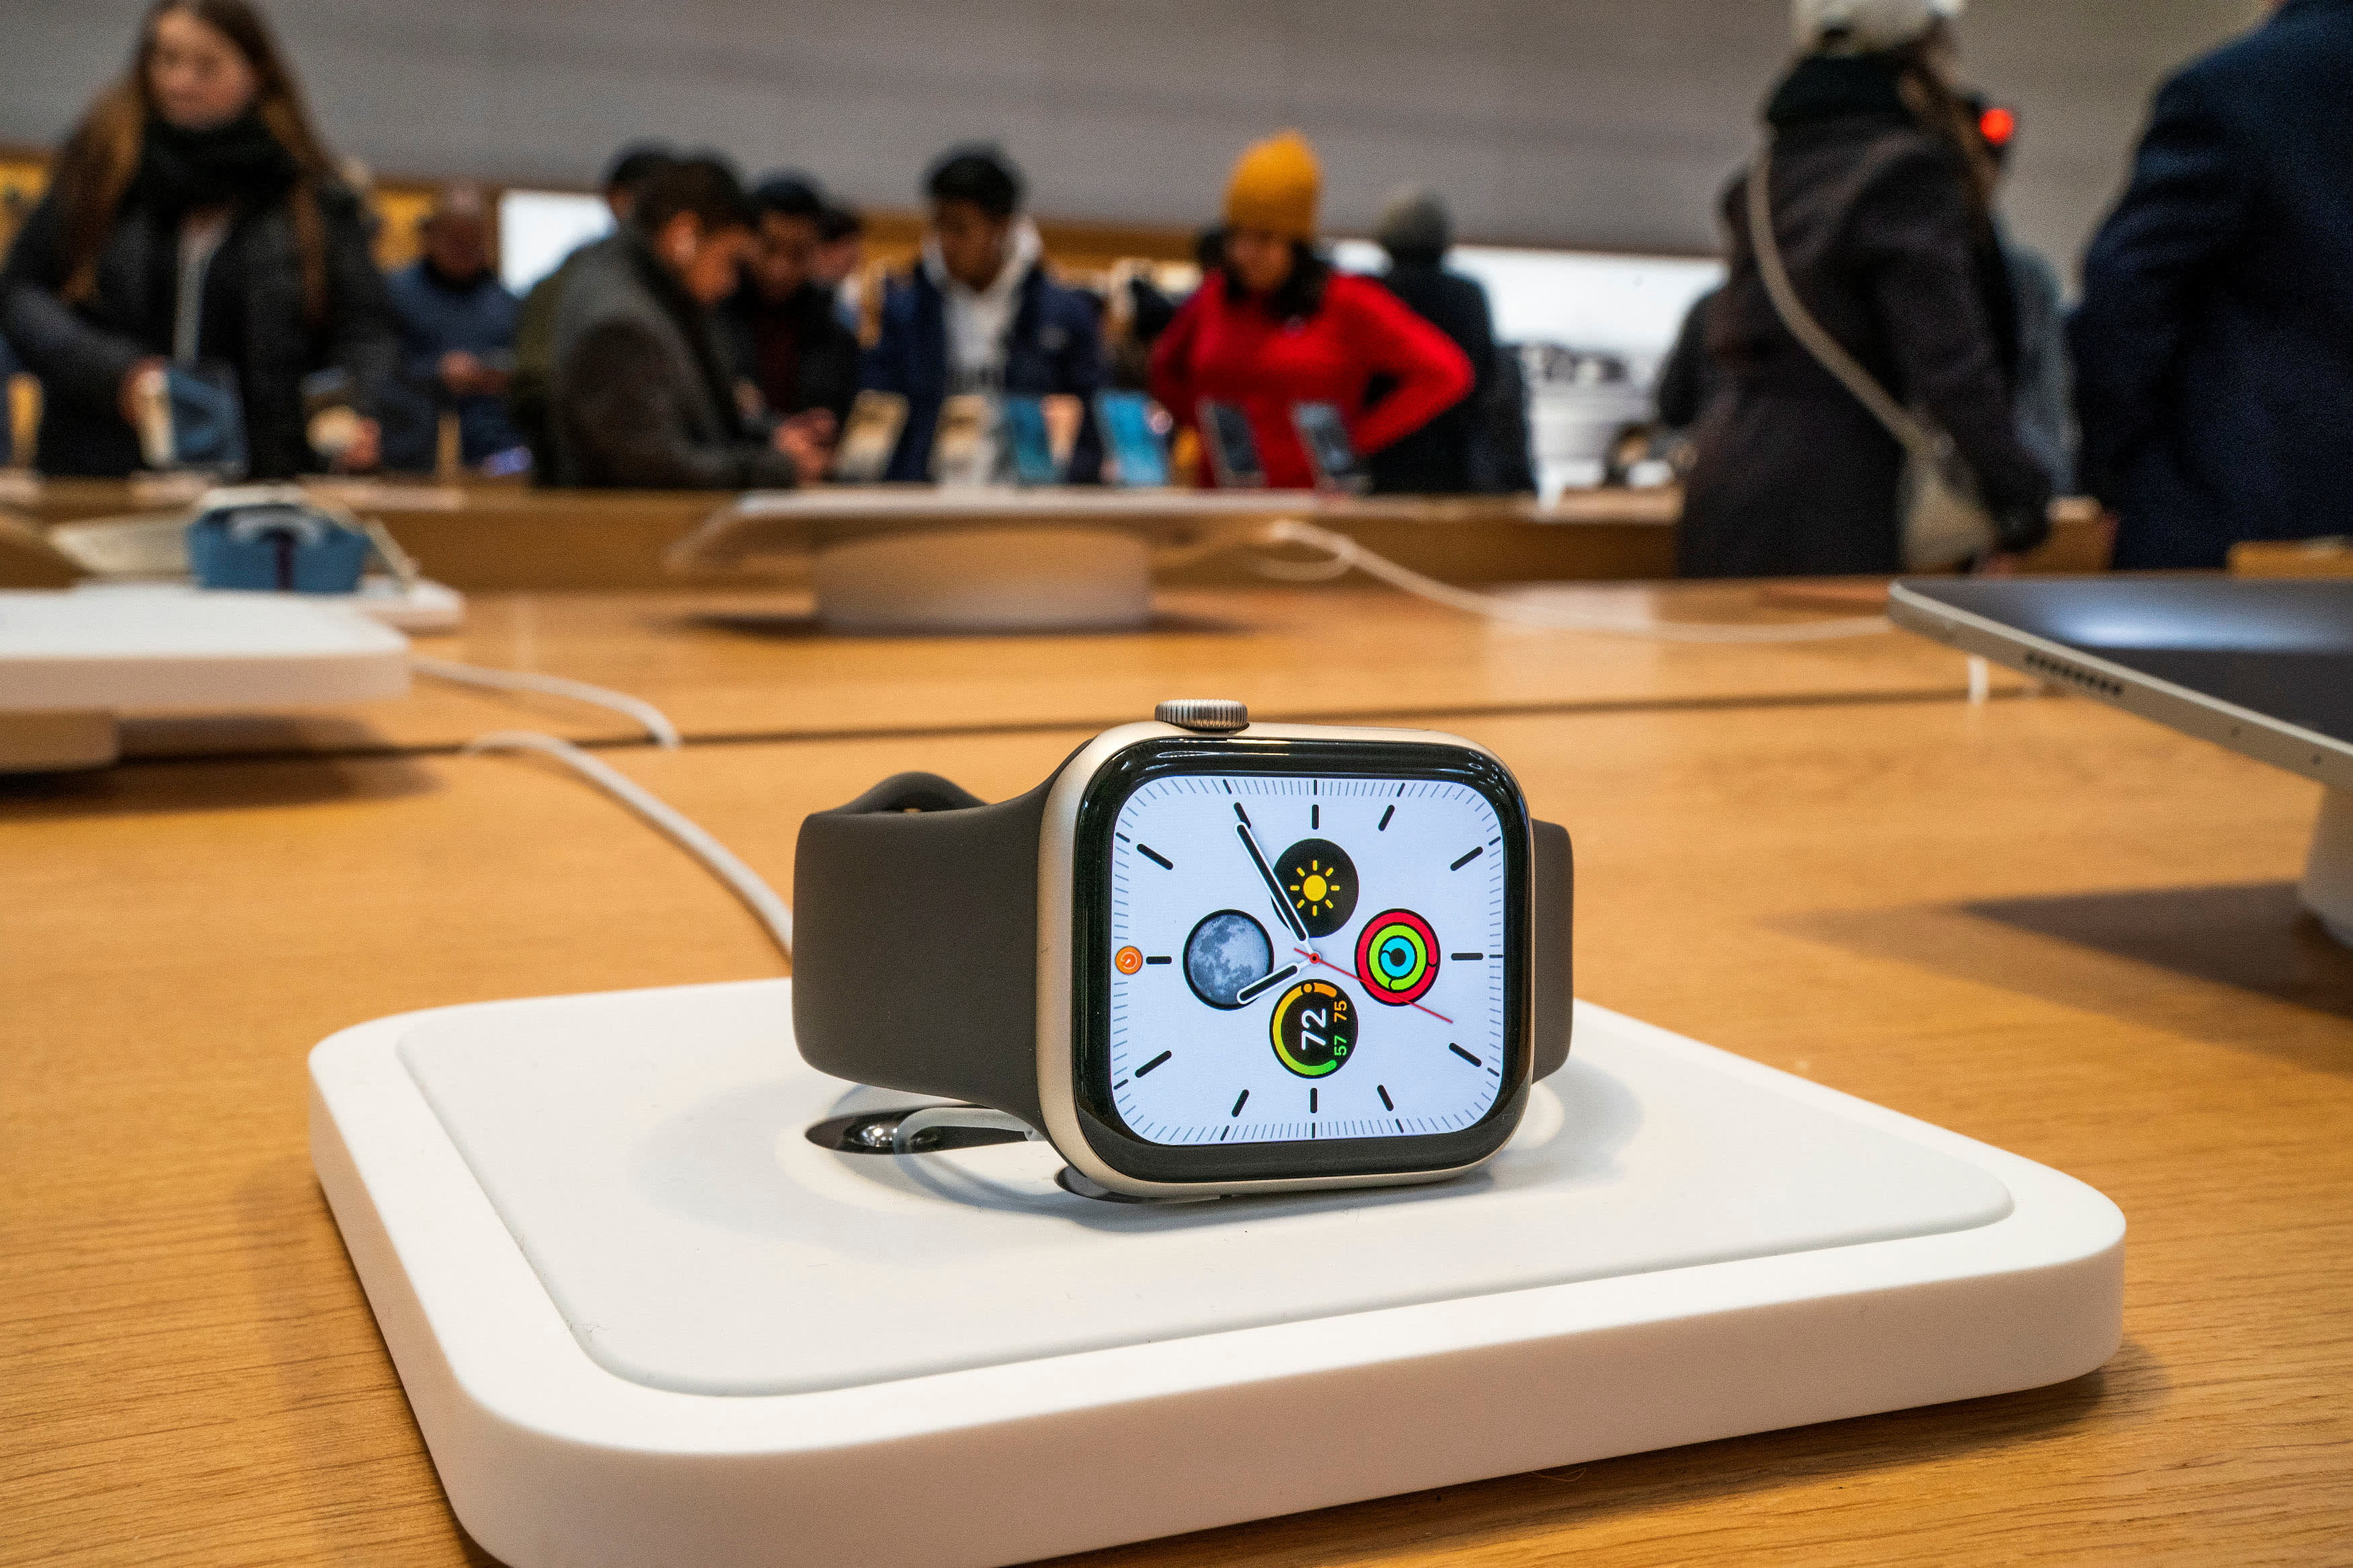 Apple Watch X: All the Rumors So Far - MacRumors